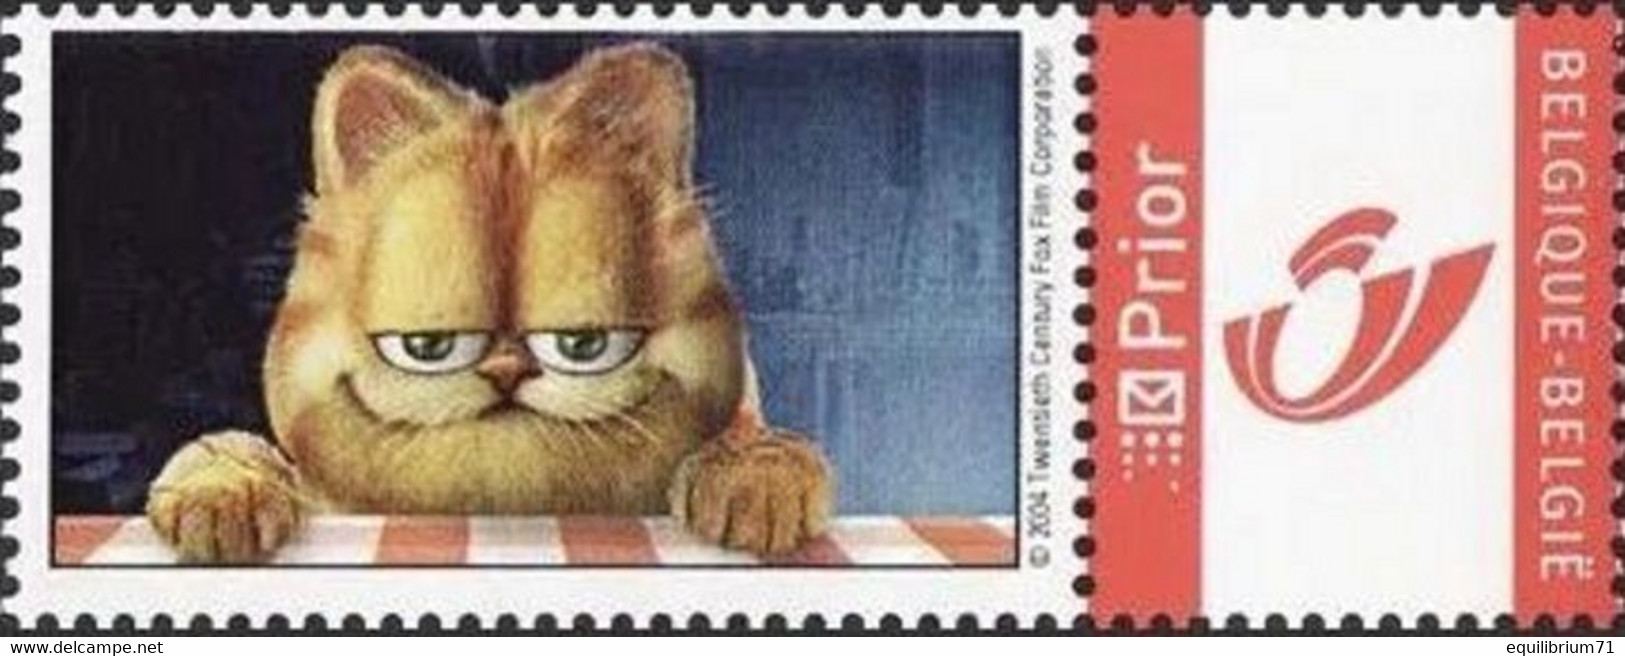 DUOSTAMP** / MY STAMP** - Garfield - Garfield The Movie - Chat / Kat / Katze / Cat - Mint